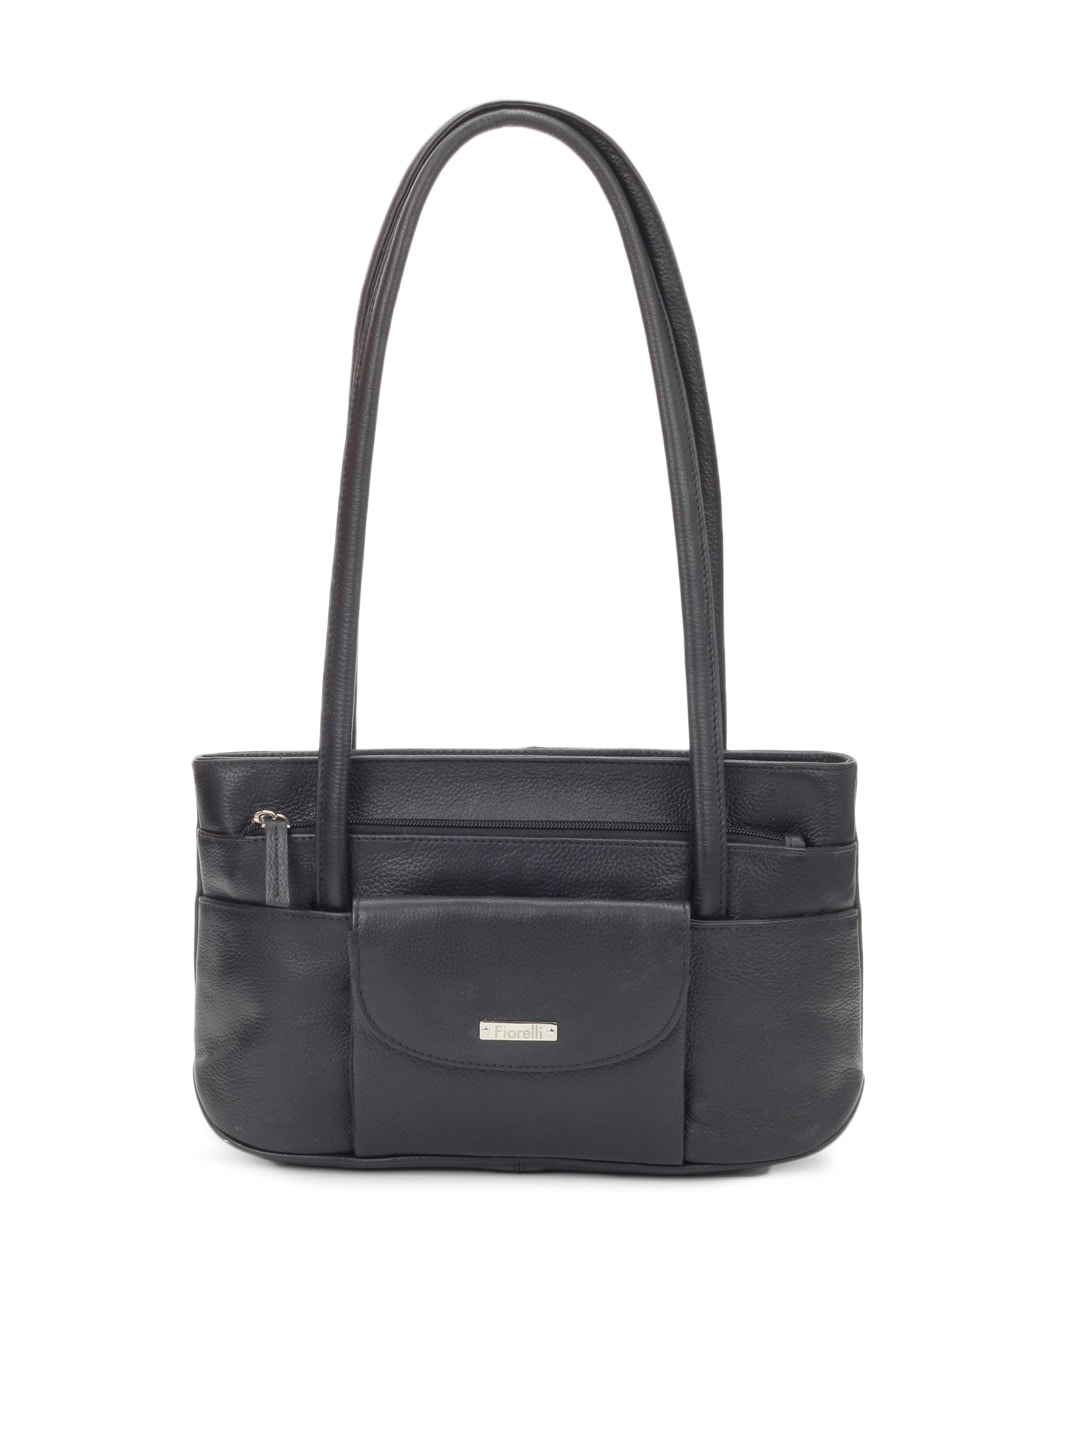 Fiorelli Women Black Leather Handbag